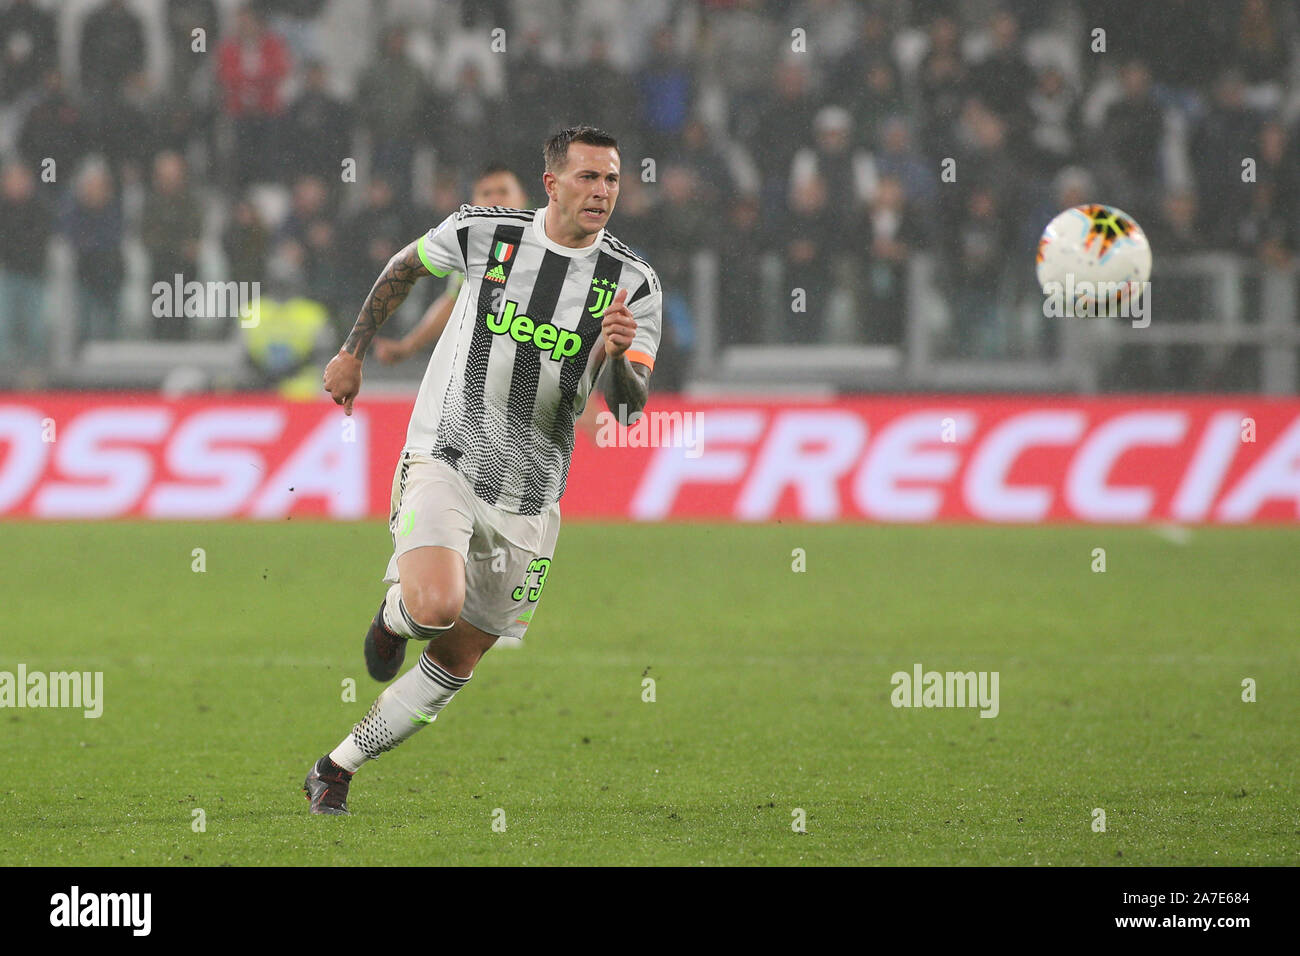 33 federico bernardeschi (juventus) during Juventus vs Genoa, Torino, Italy, 30 Oct 2019, Soccer Italian Soccer Serie A Men Championship Stock Photo